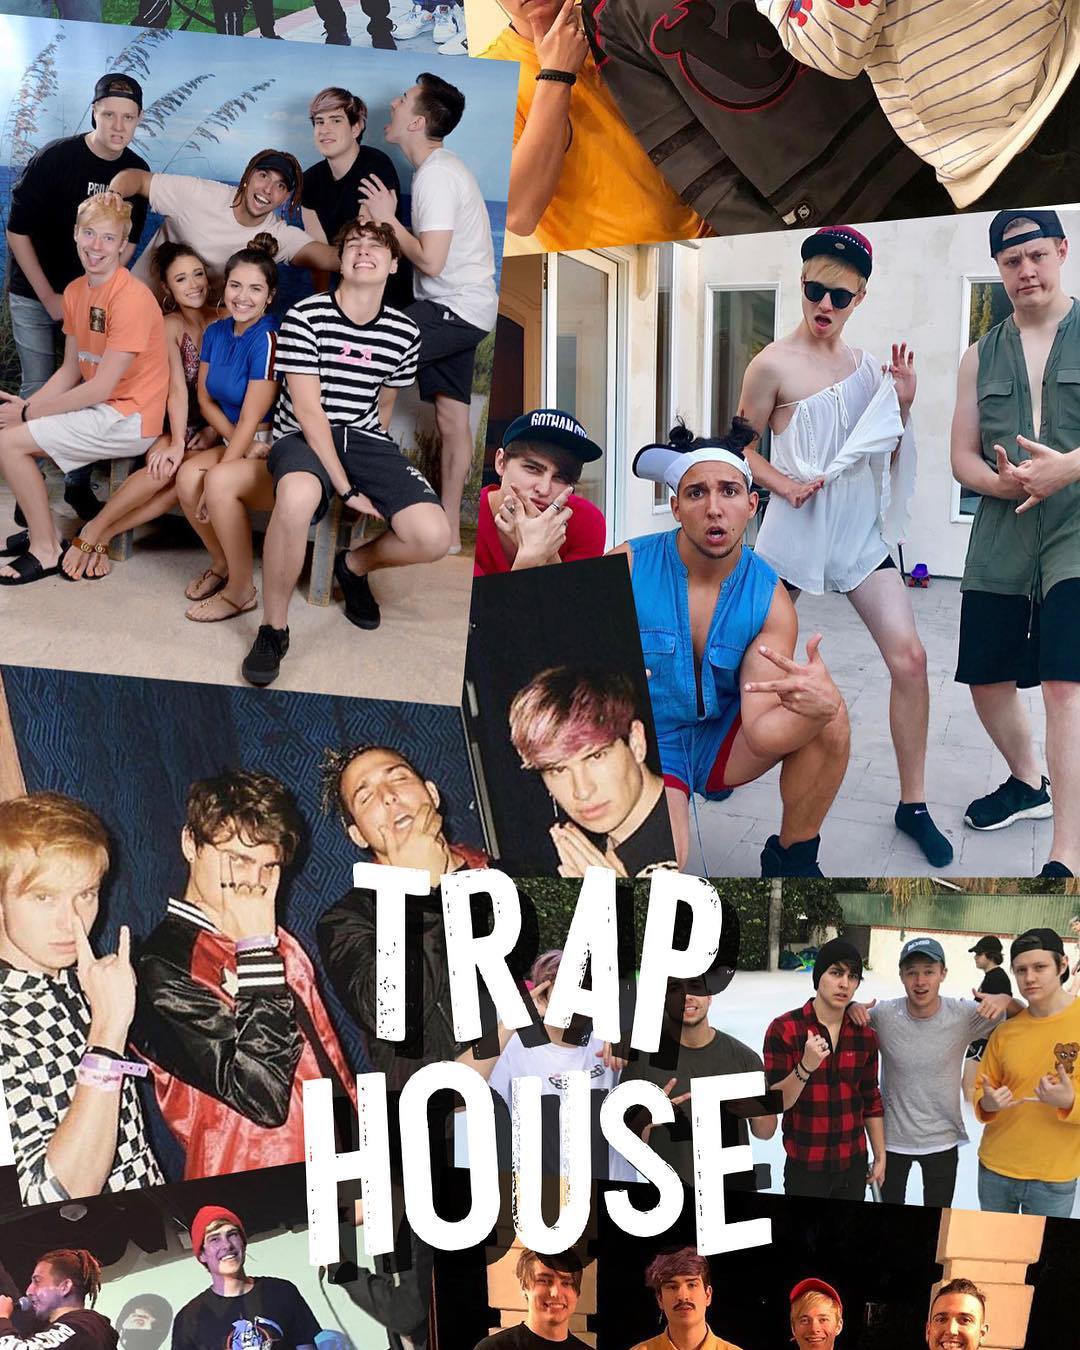 xplrwallpaper Instagram post (photo) Some trap house appreciation